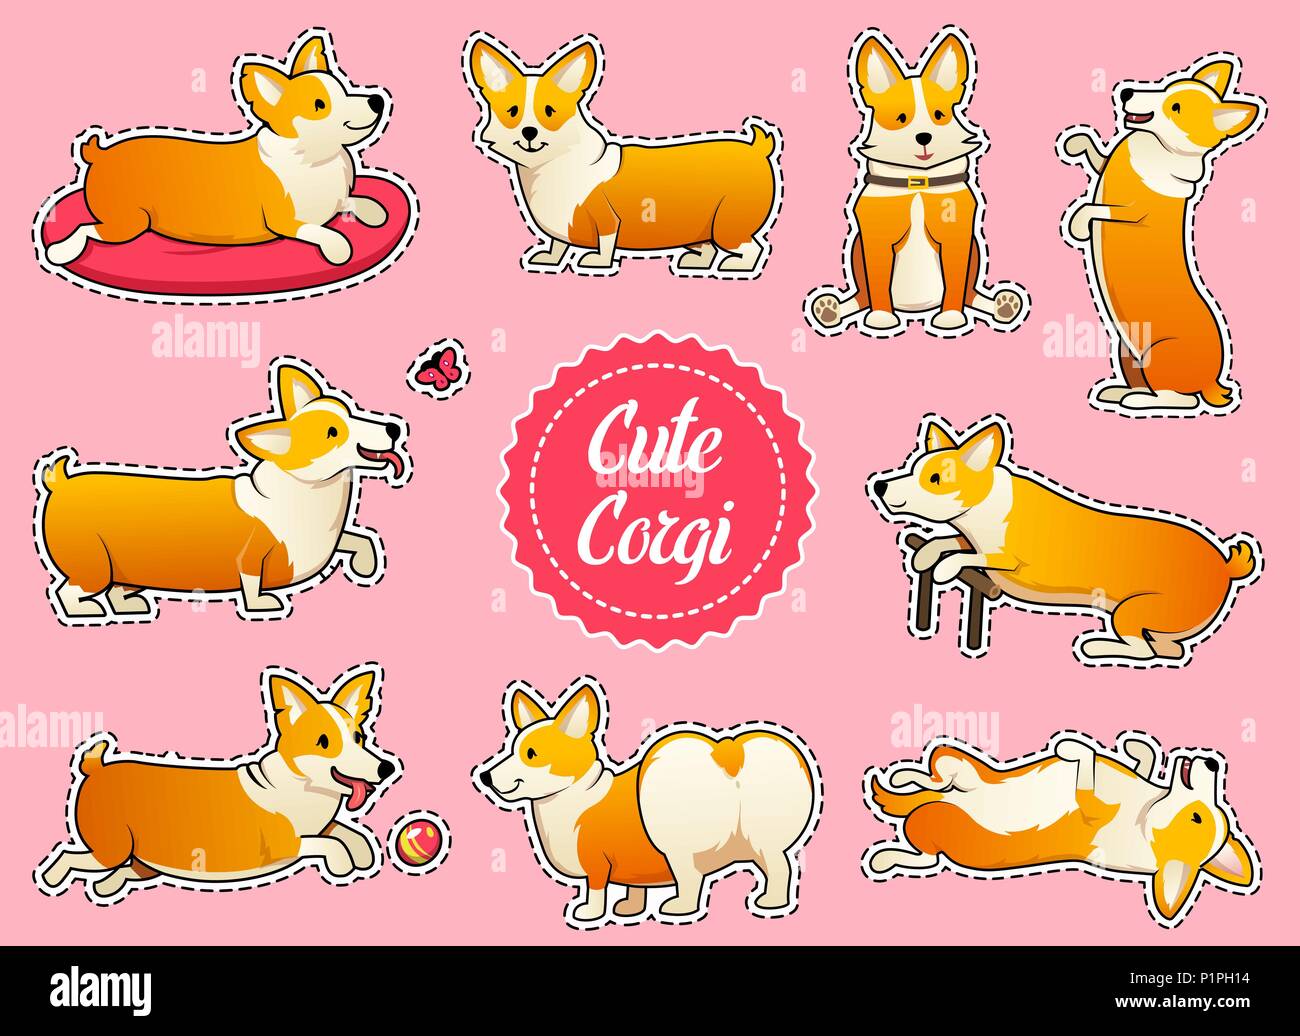 Ein Fuchs tanzende Tier Cartoon Aufkleber Illustration Stock-Vektorgrafik -  Alamy